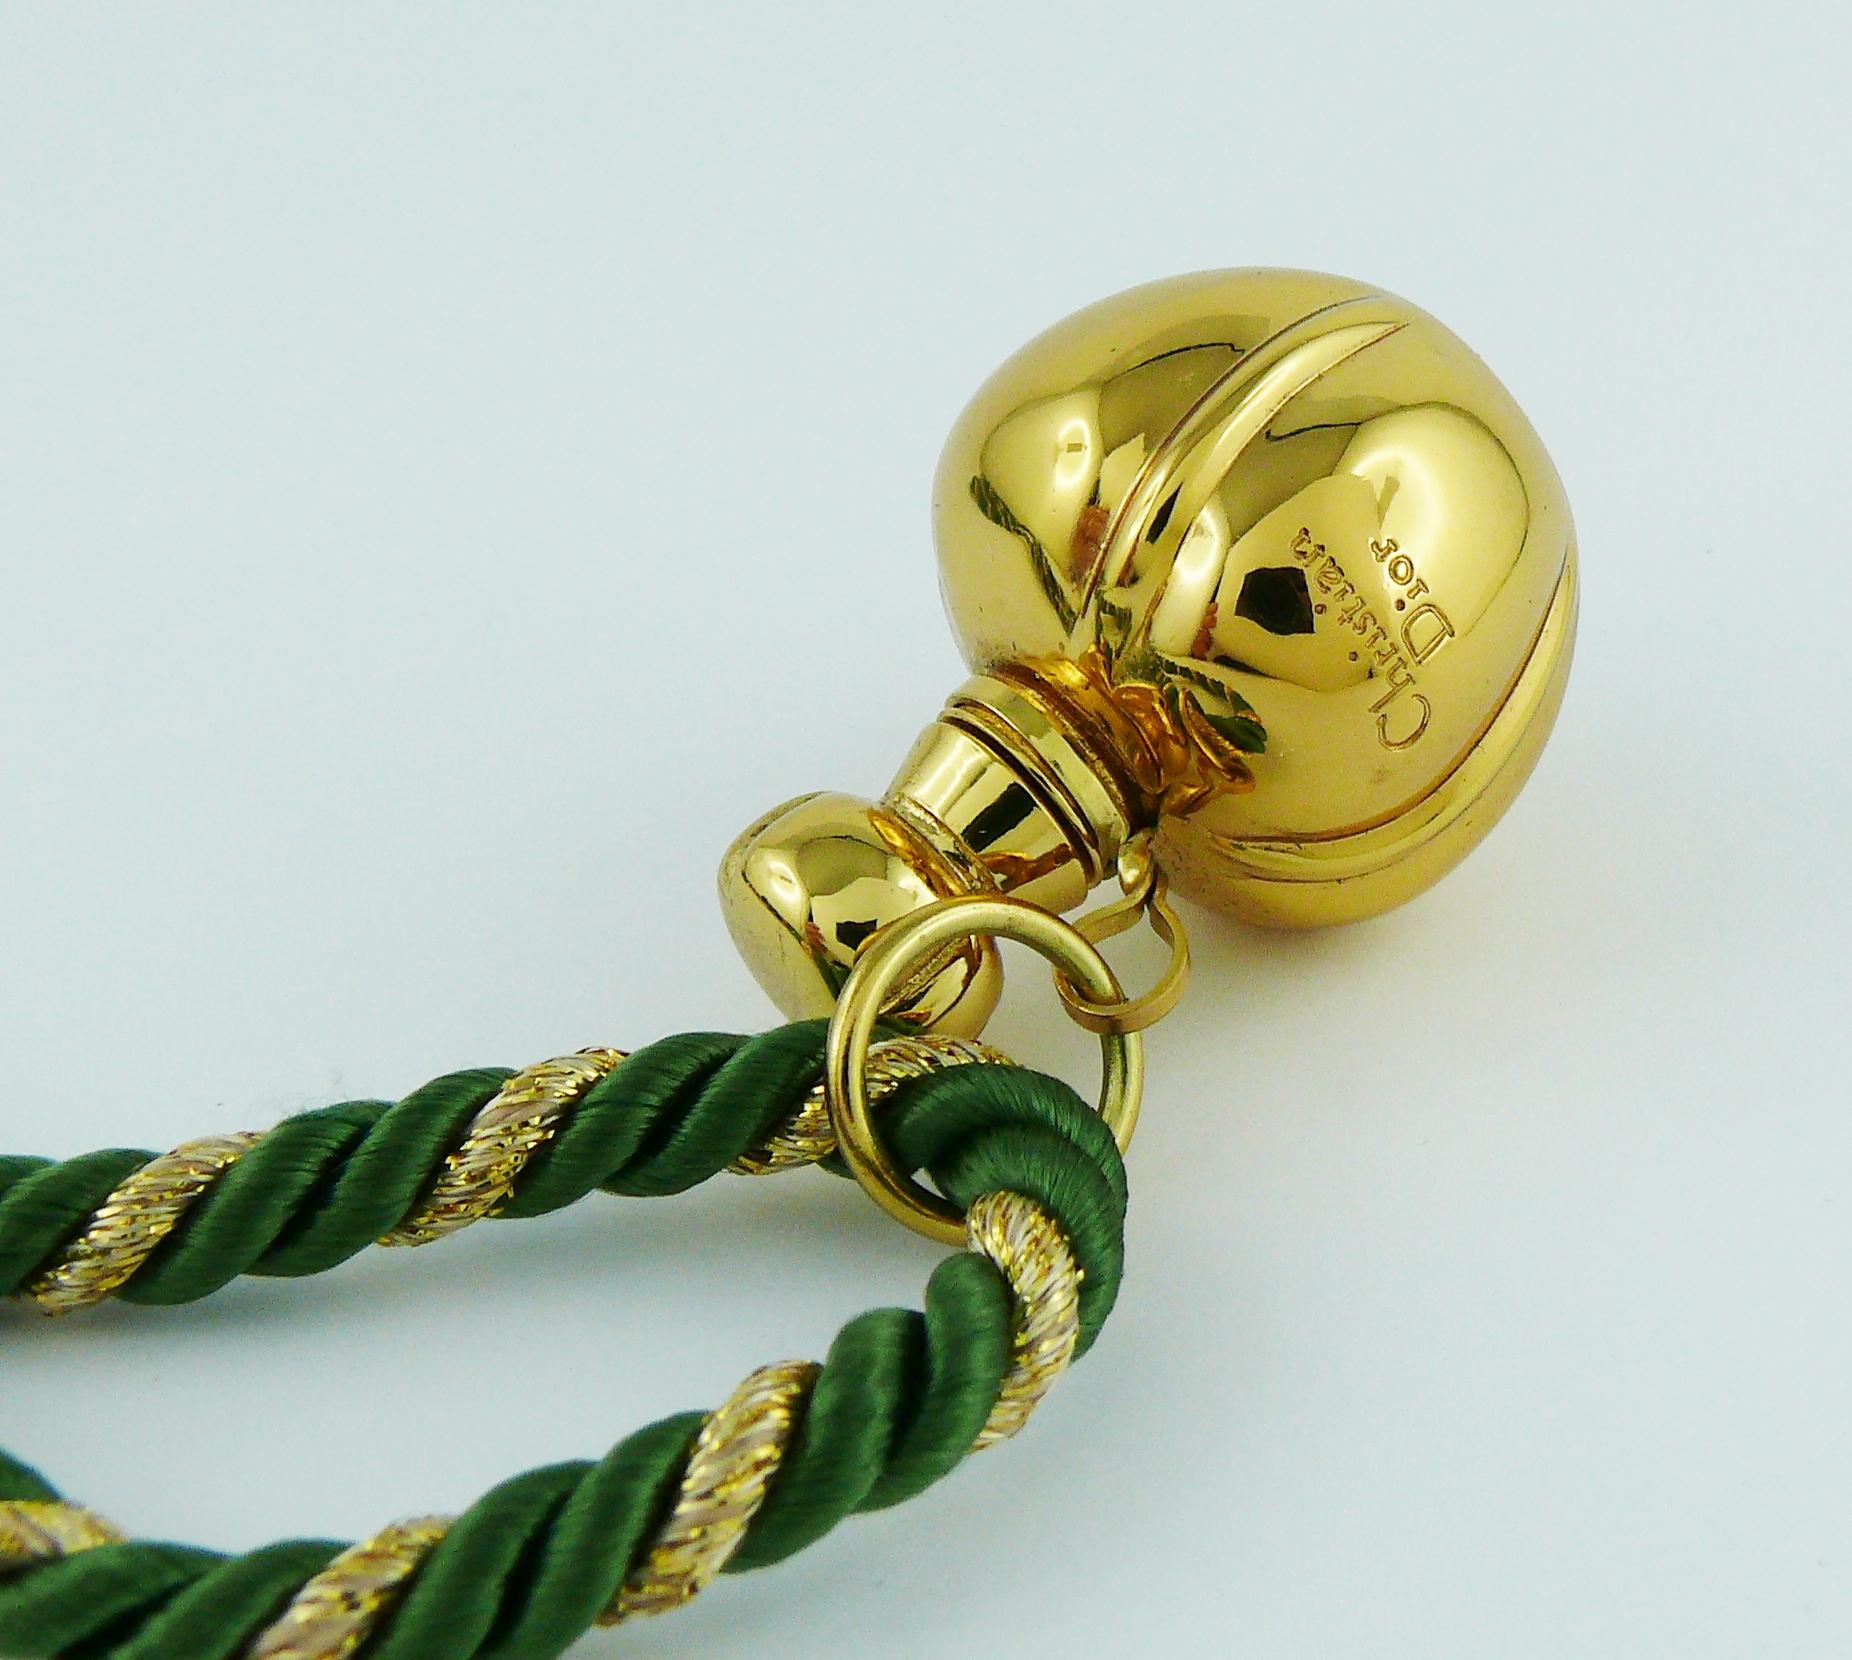 Women's Christian Dior Vintage Gold Toned Miniature Perfume Bottle Pendant Necklace